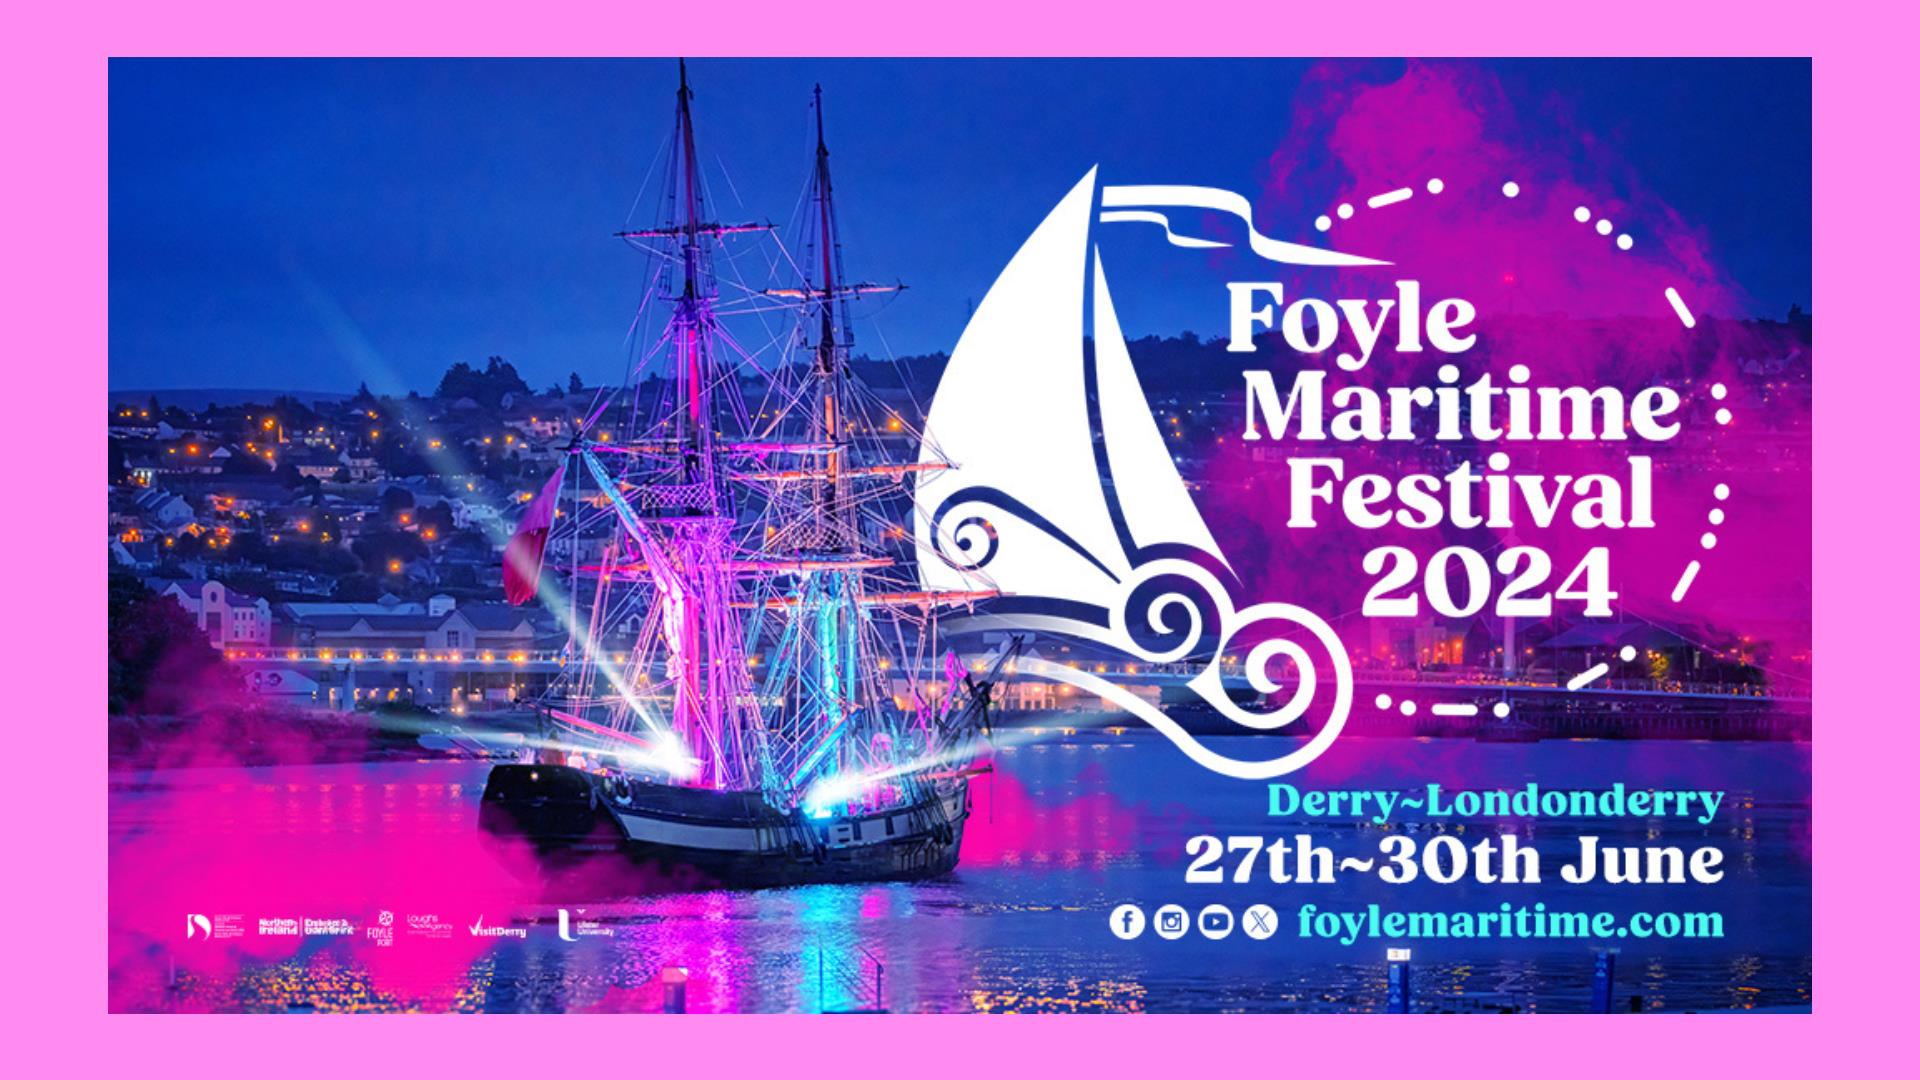 Foyle Maritime 2024 promotional poster